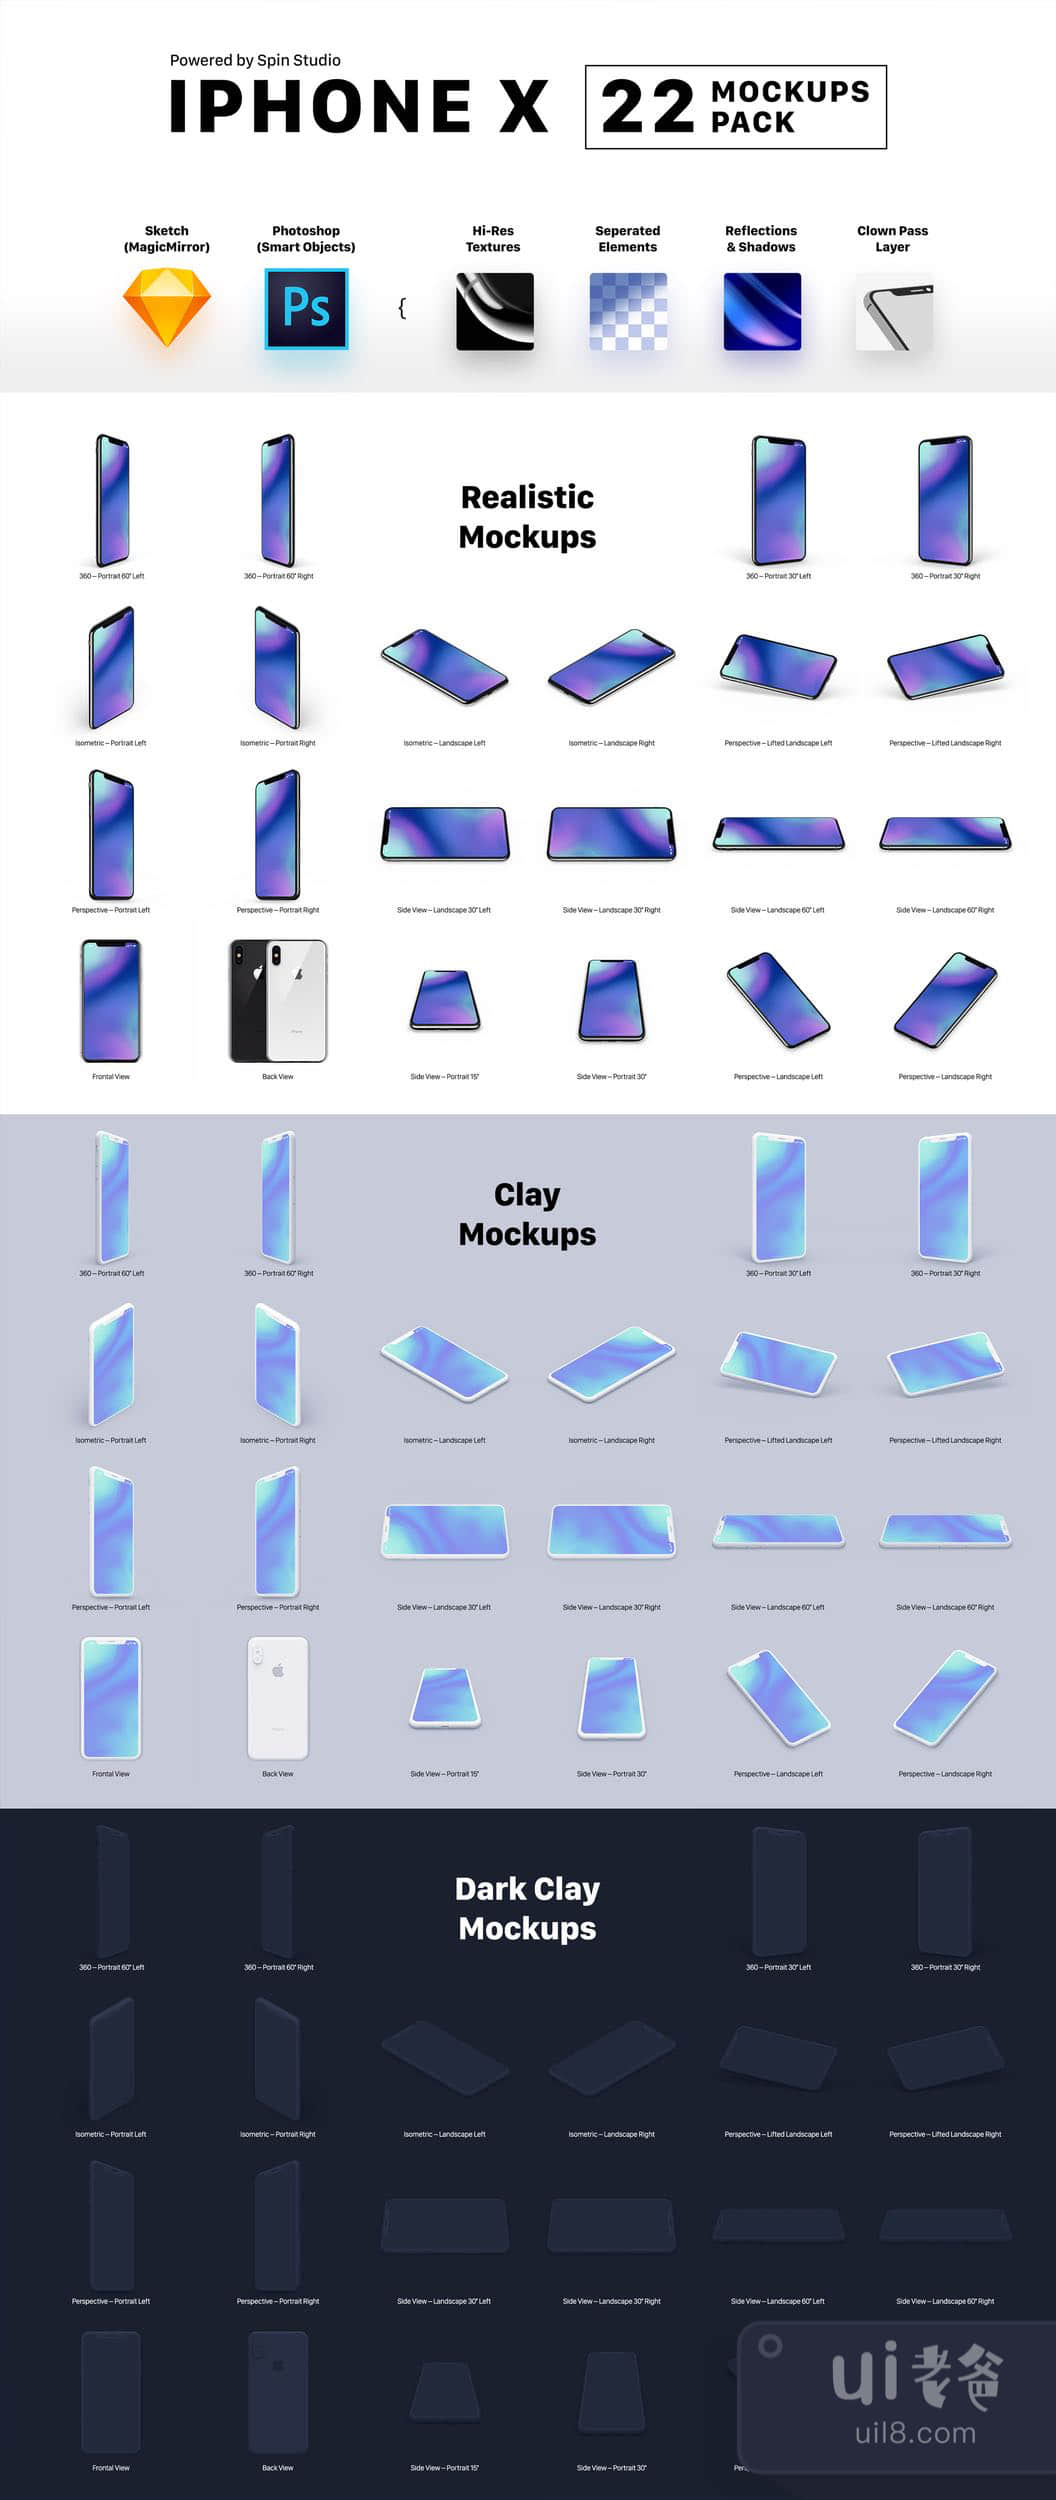 iPhone X 22个模型包 (iPhone X 22 Mockups Pack)插图1